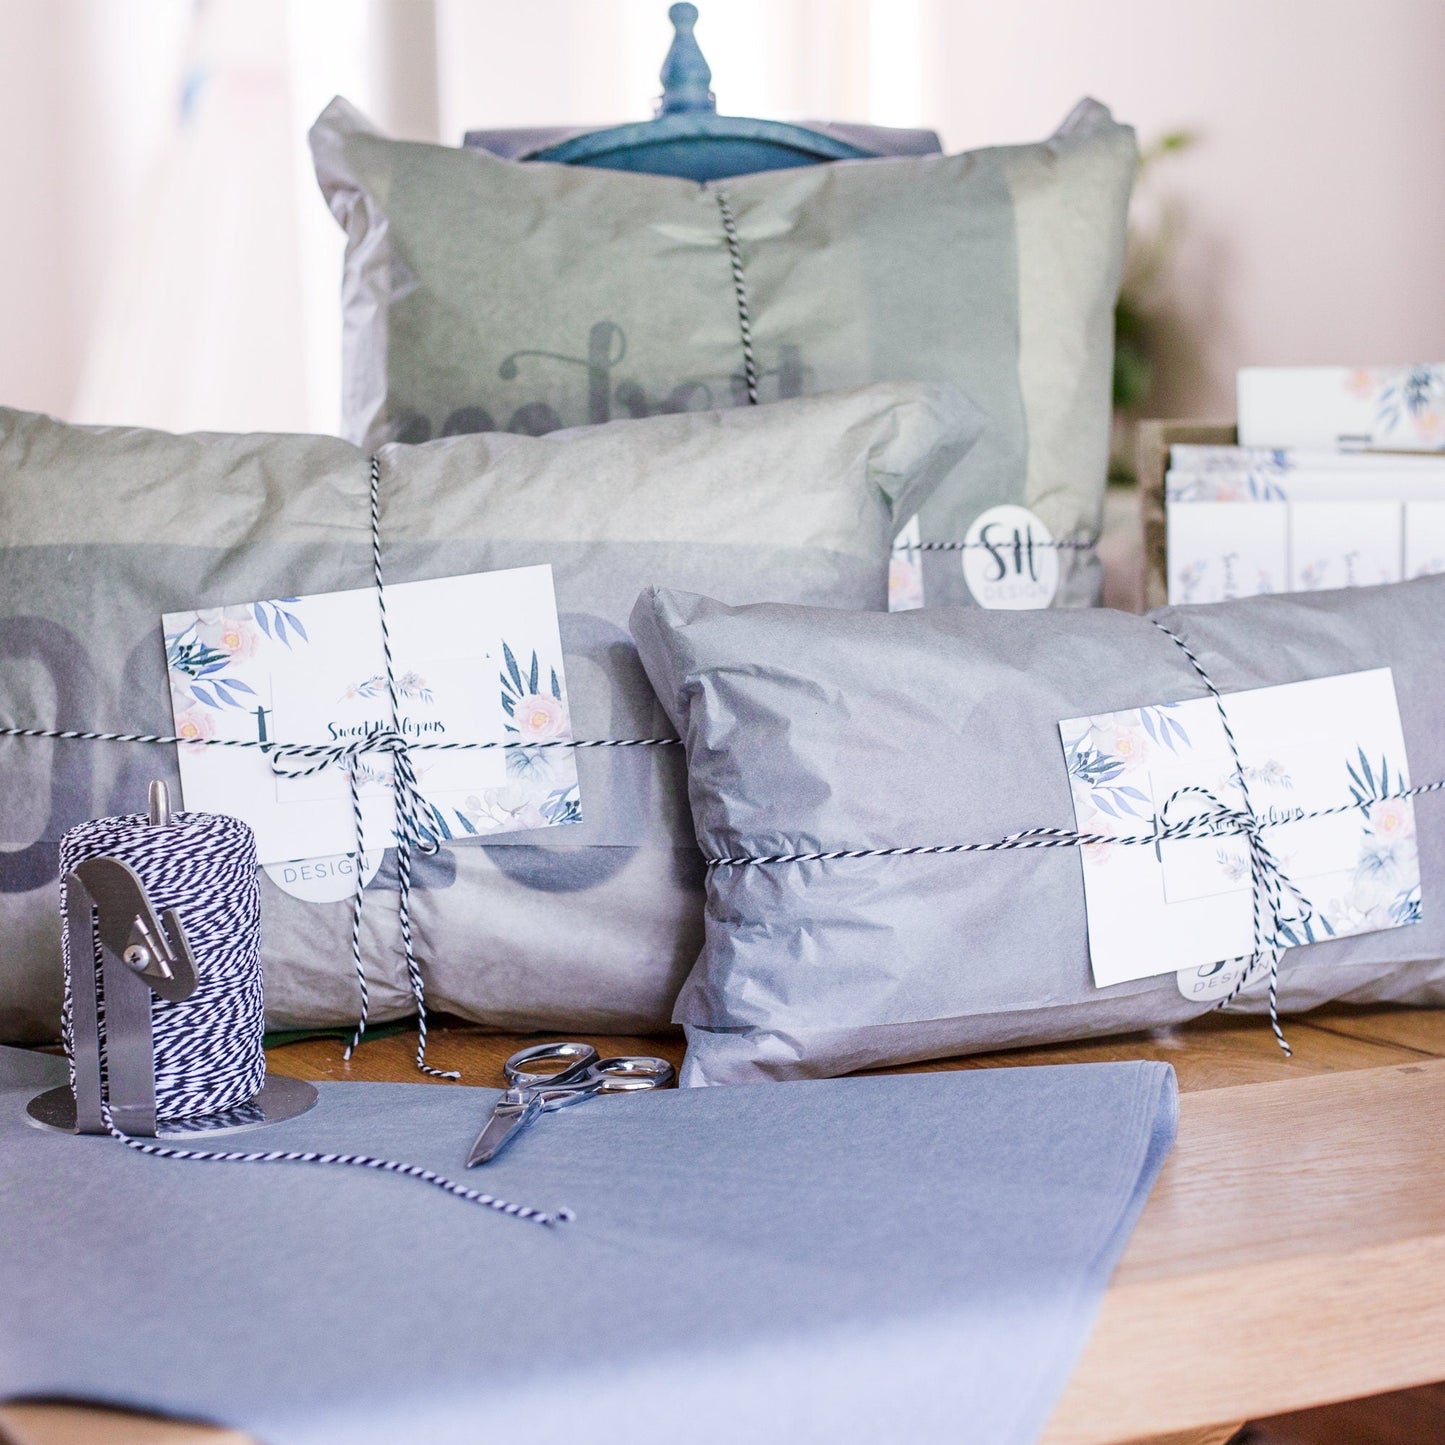 Personalized Area Code Pillow | Personalized Pillow | Custom Gift | Monogrammed Gift | Rustic Home Decor | Dorm Decor | Farmhouse Decor